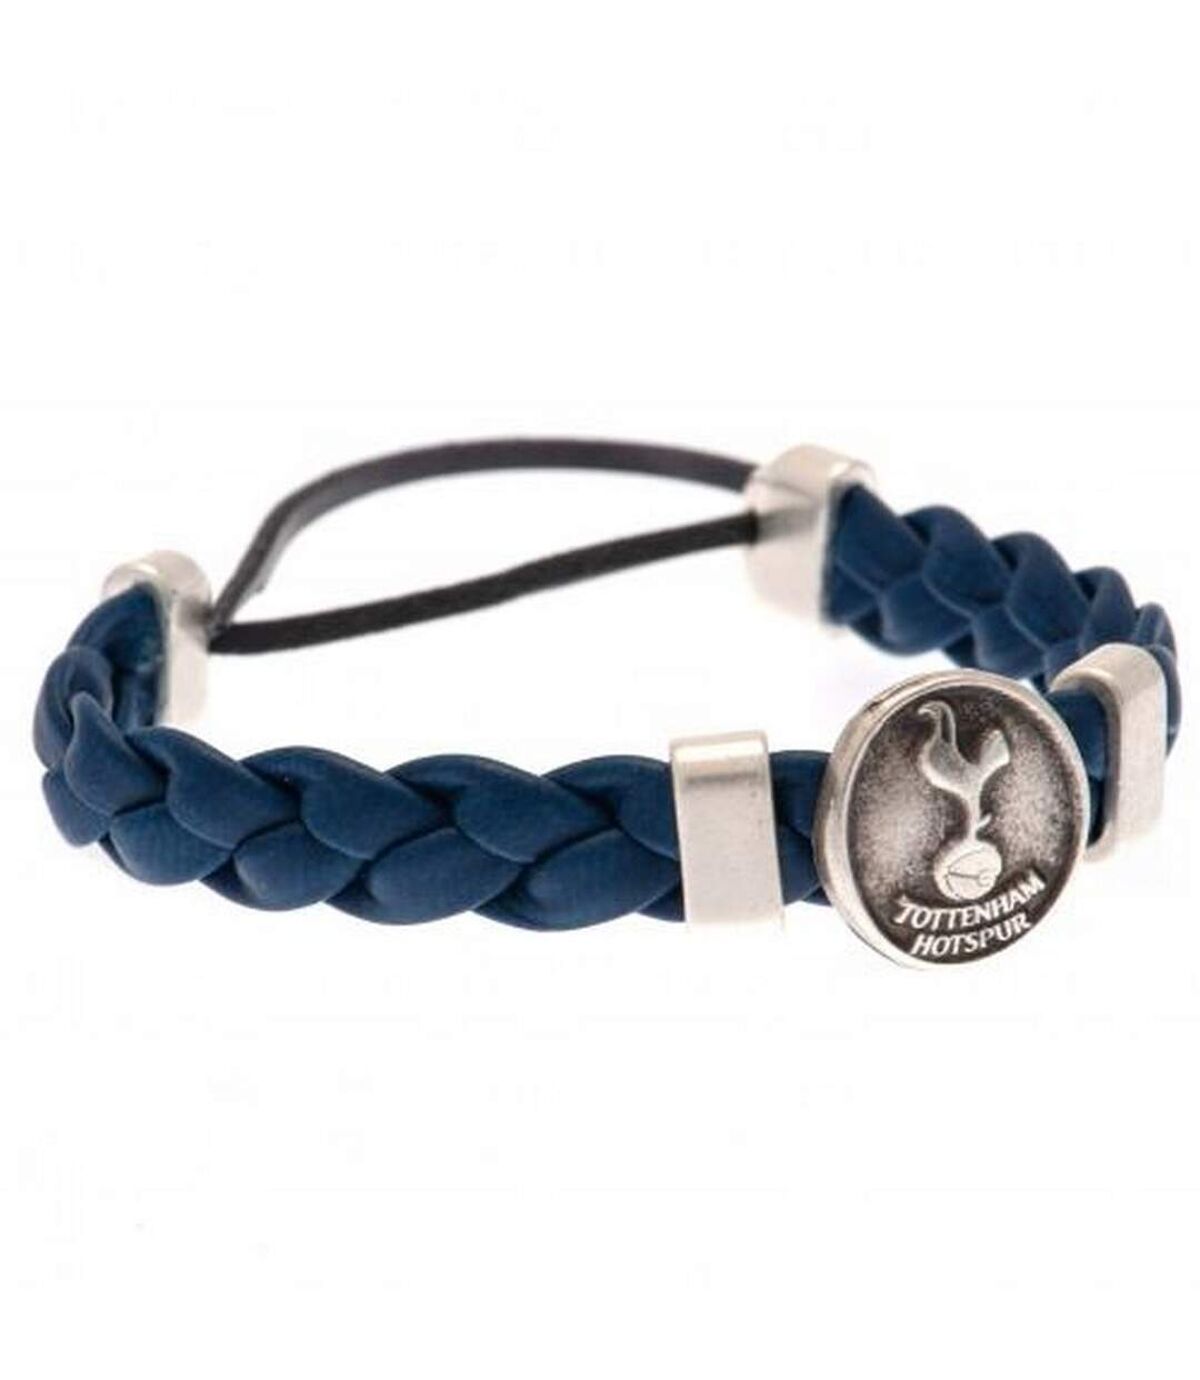 Tottenham Hotspur FC - Bracelet - Adulte (Bleu marine) (Taille unique) - UTTA6371